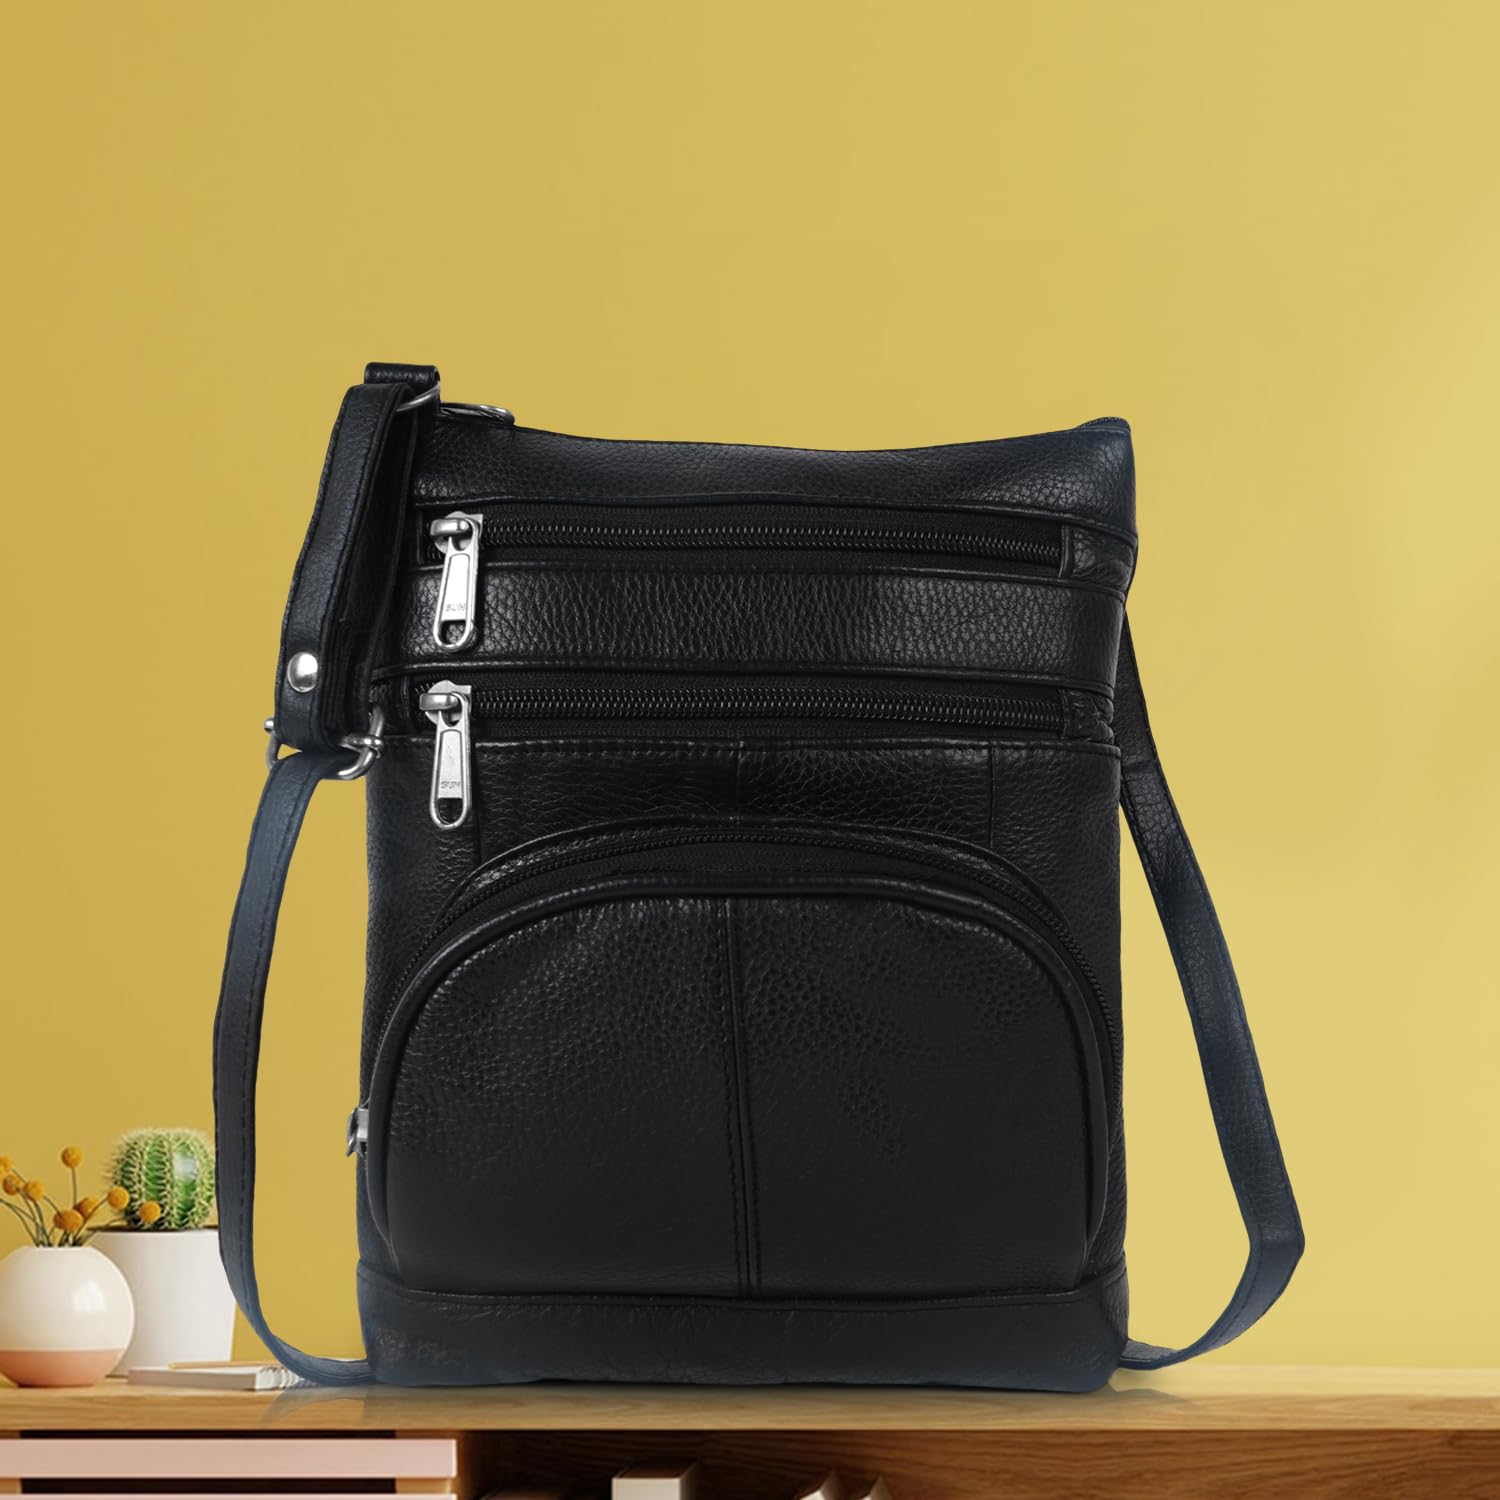 CIMONI® Premium Genuine Leather Sling Bag Stylish & Unique Design Daytrip Trendy Travel Bag Crossbody Purse For Women (Color - Black)